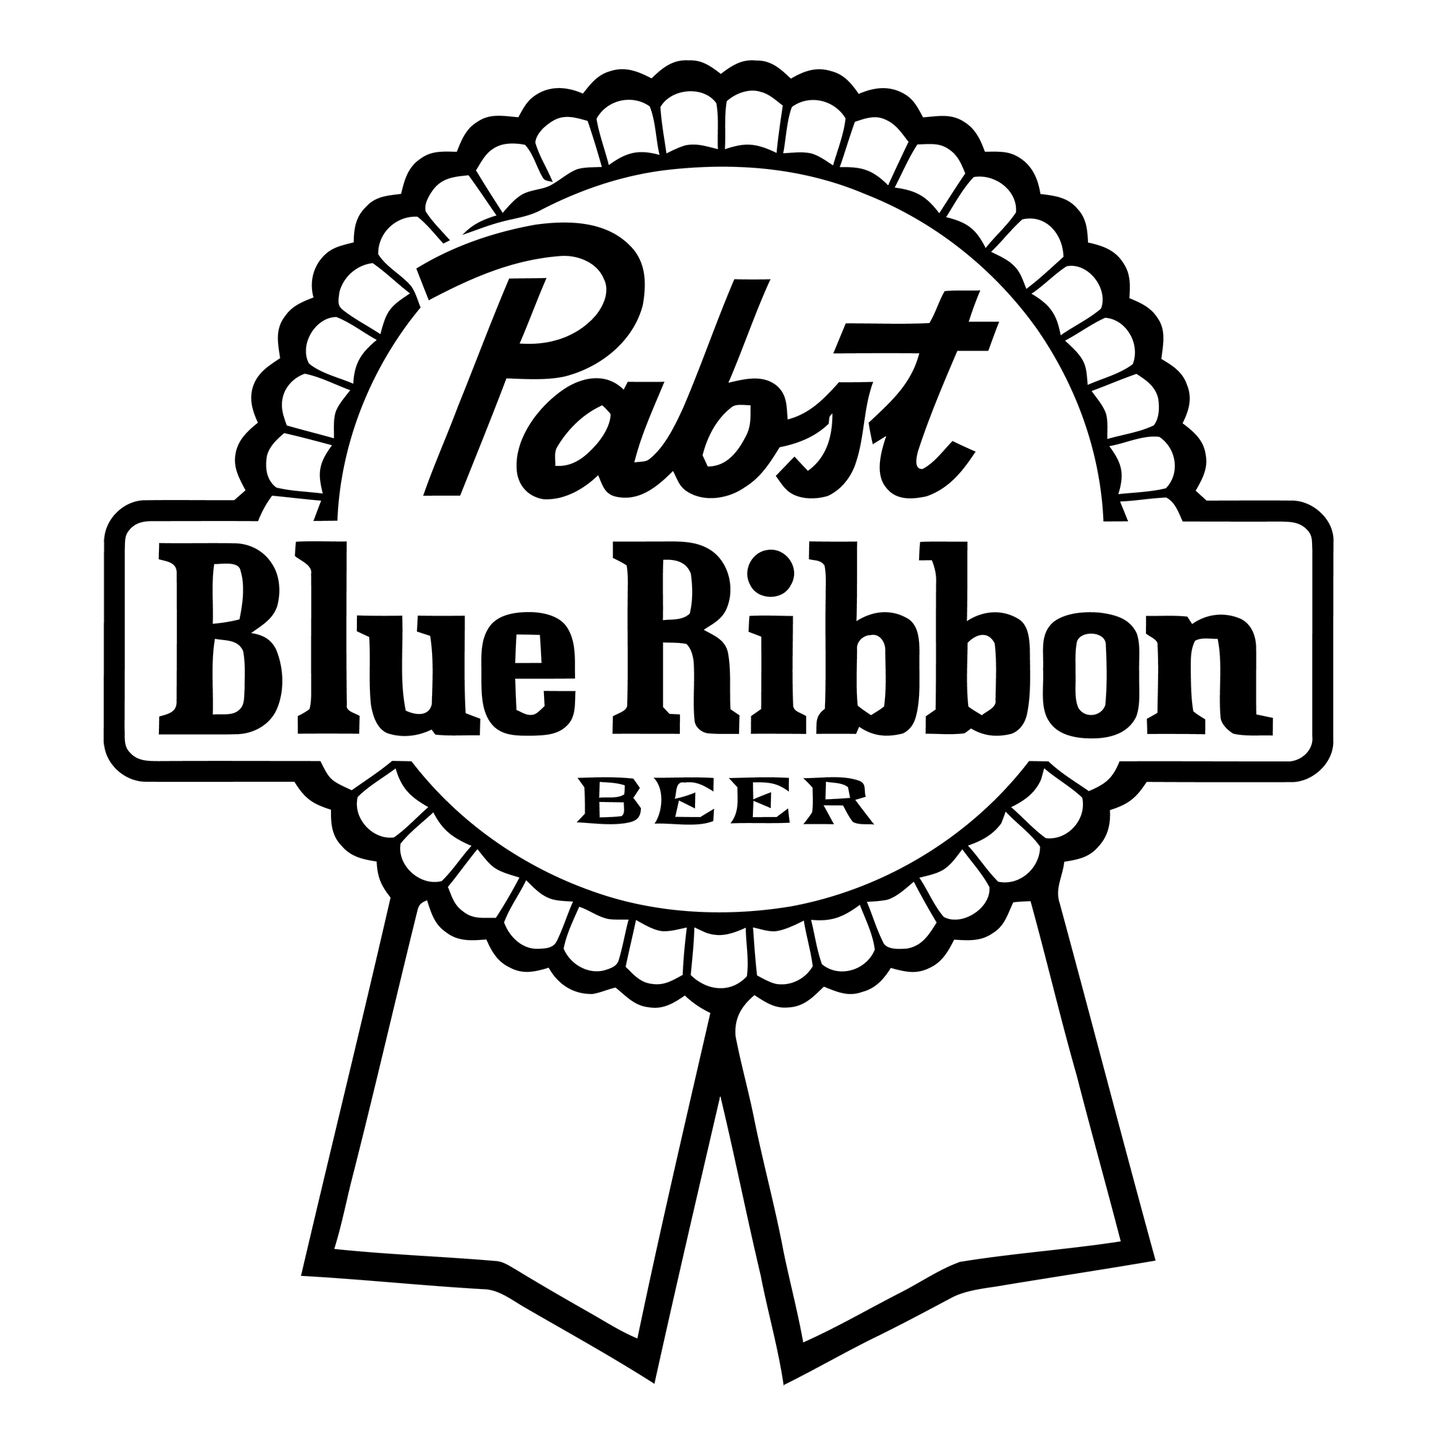 Pabst Blue Ribbon PBR Vinyl Decal Sticker